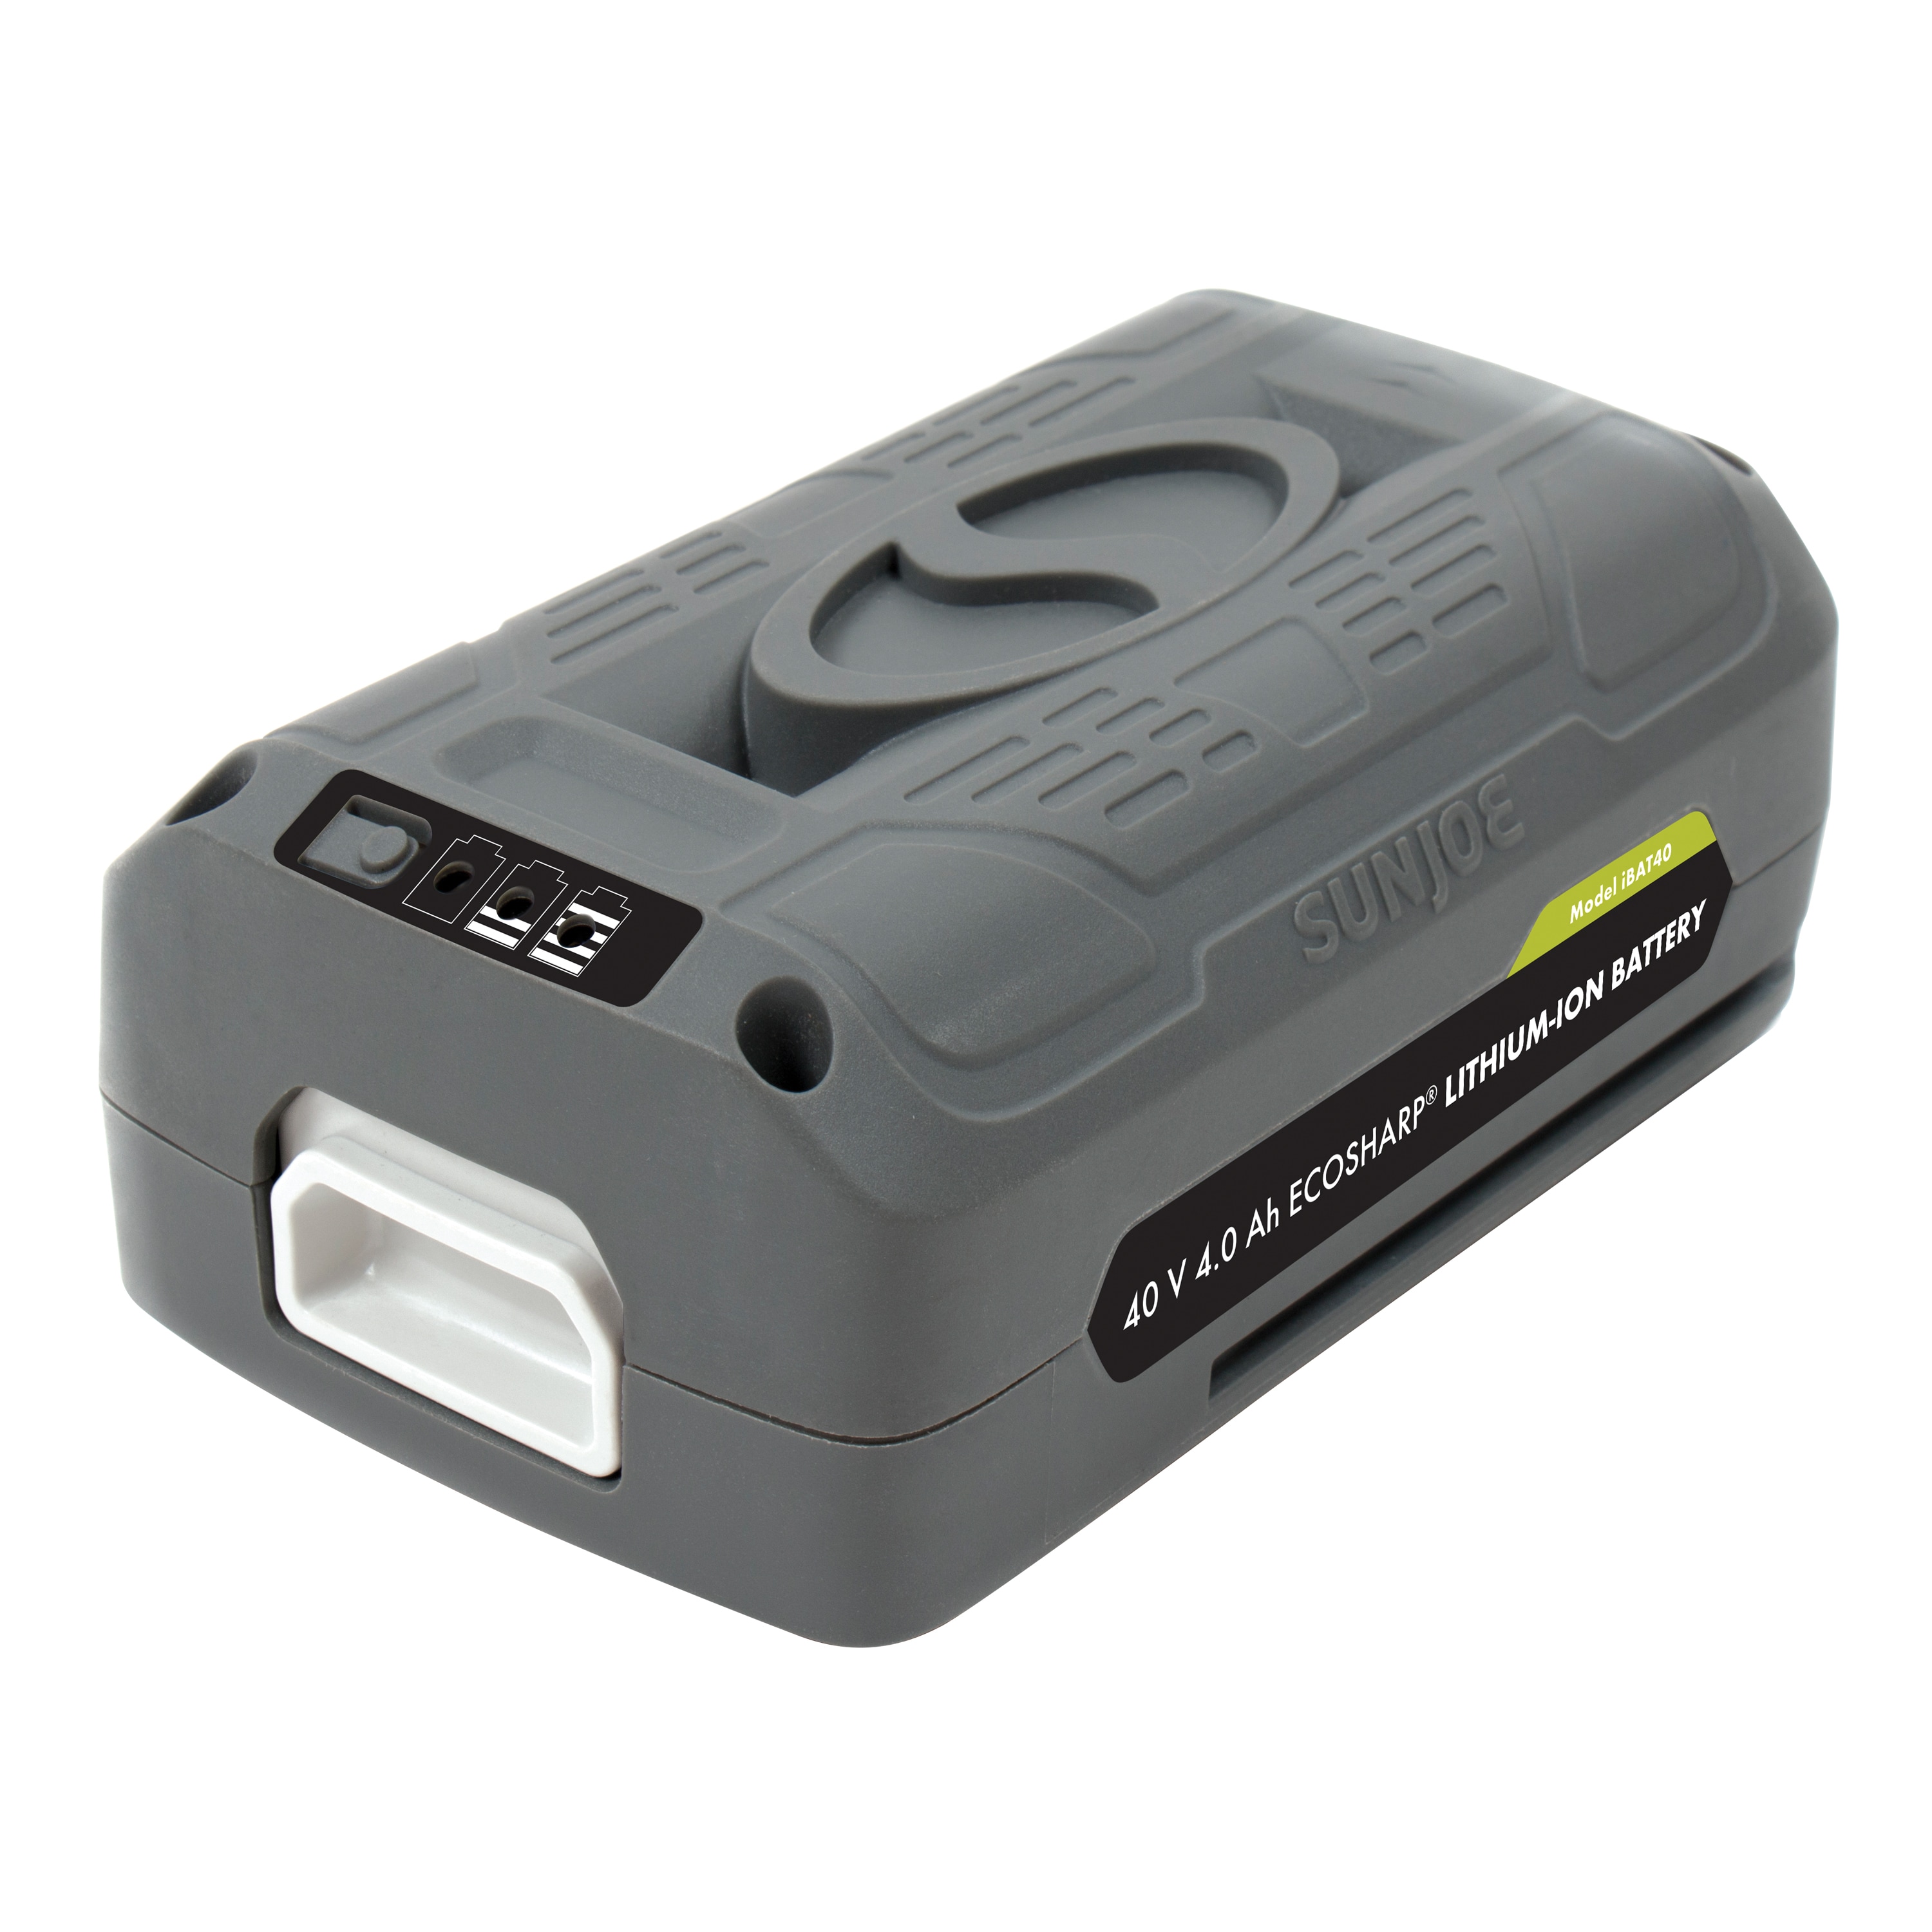 Snow Joe iBAT40 4 Amp Eco Sharp Lithium-Ion Battery 40-volt for sale online